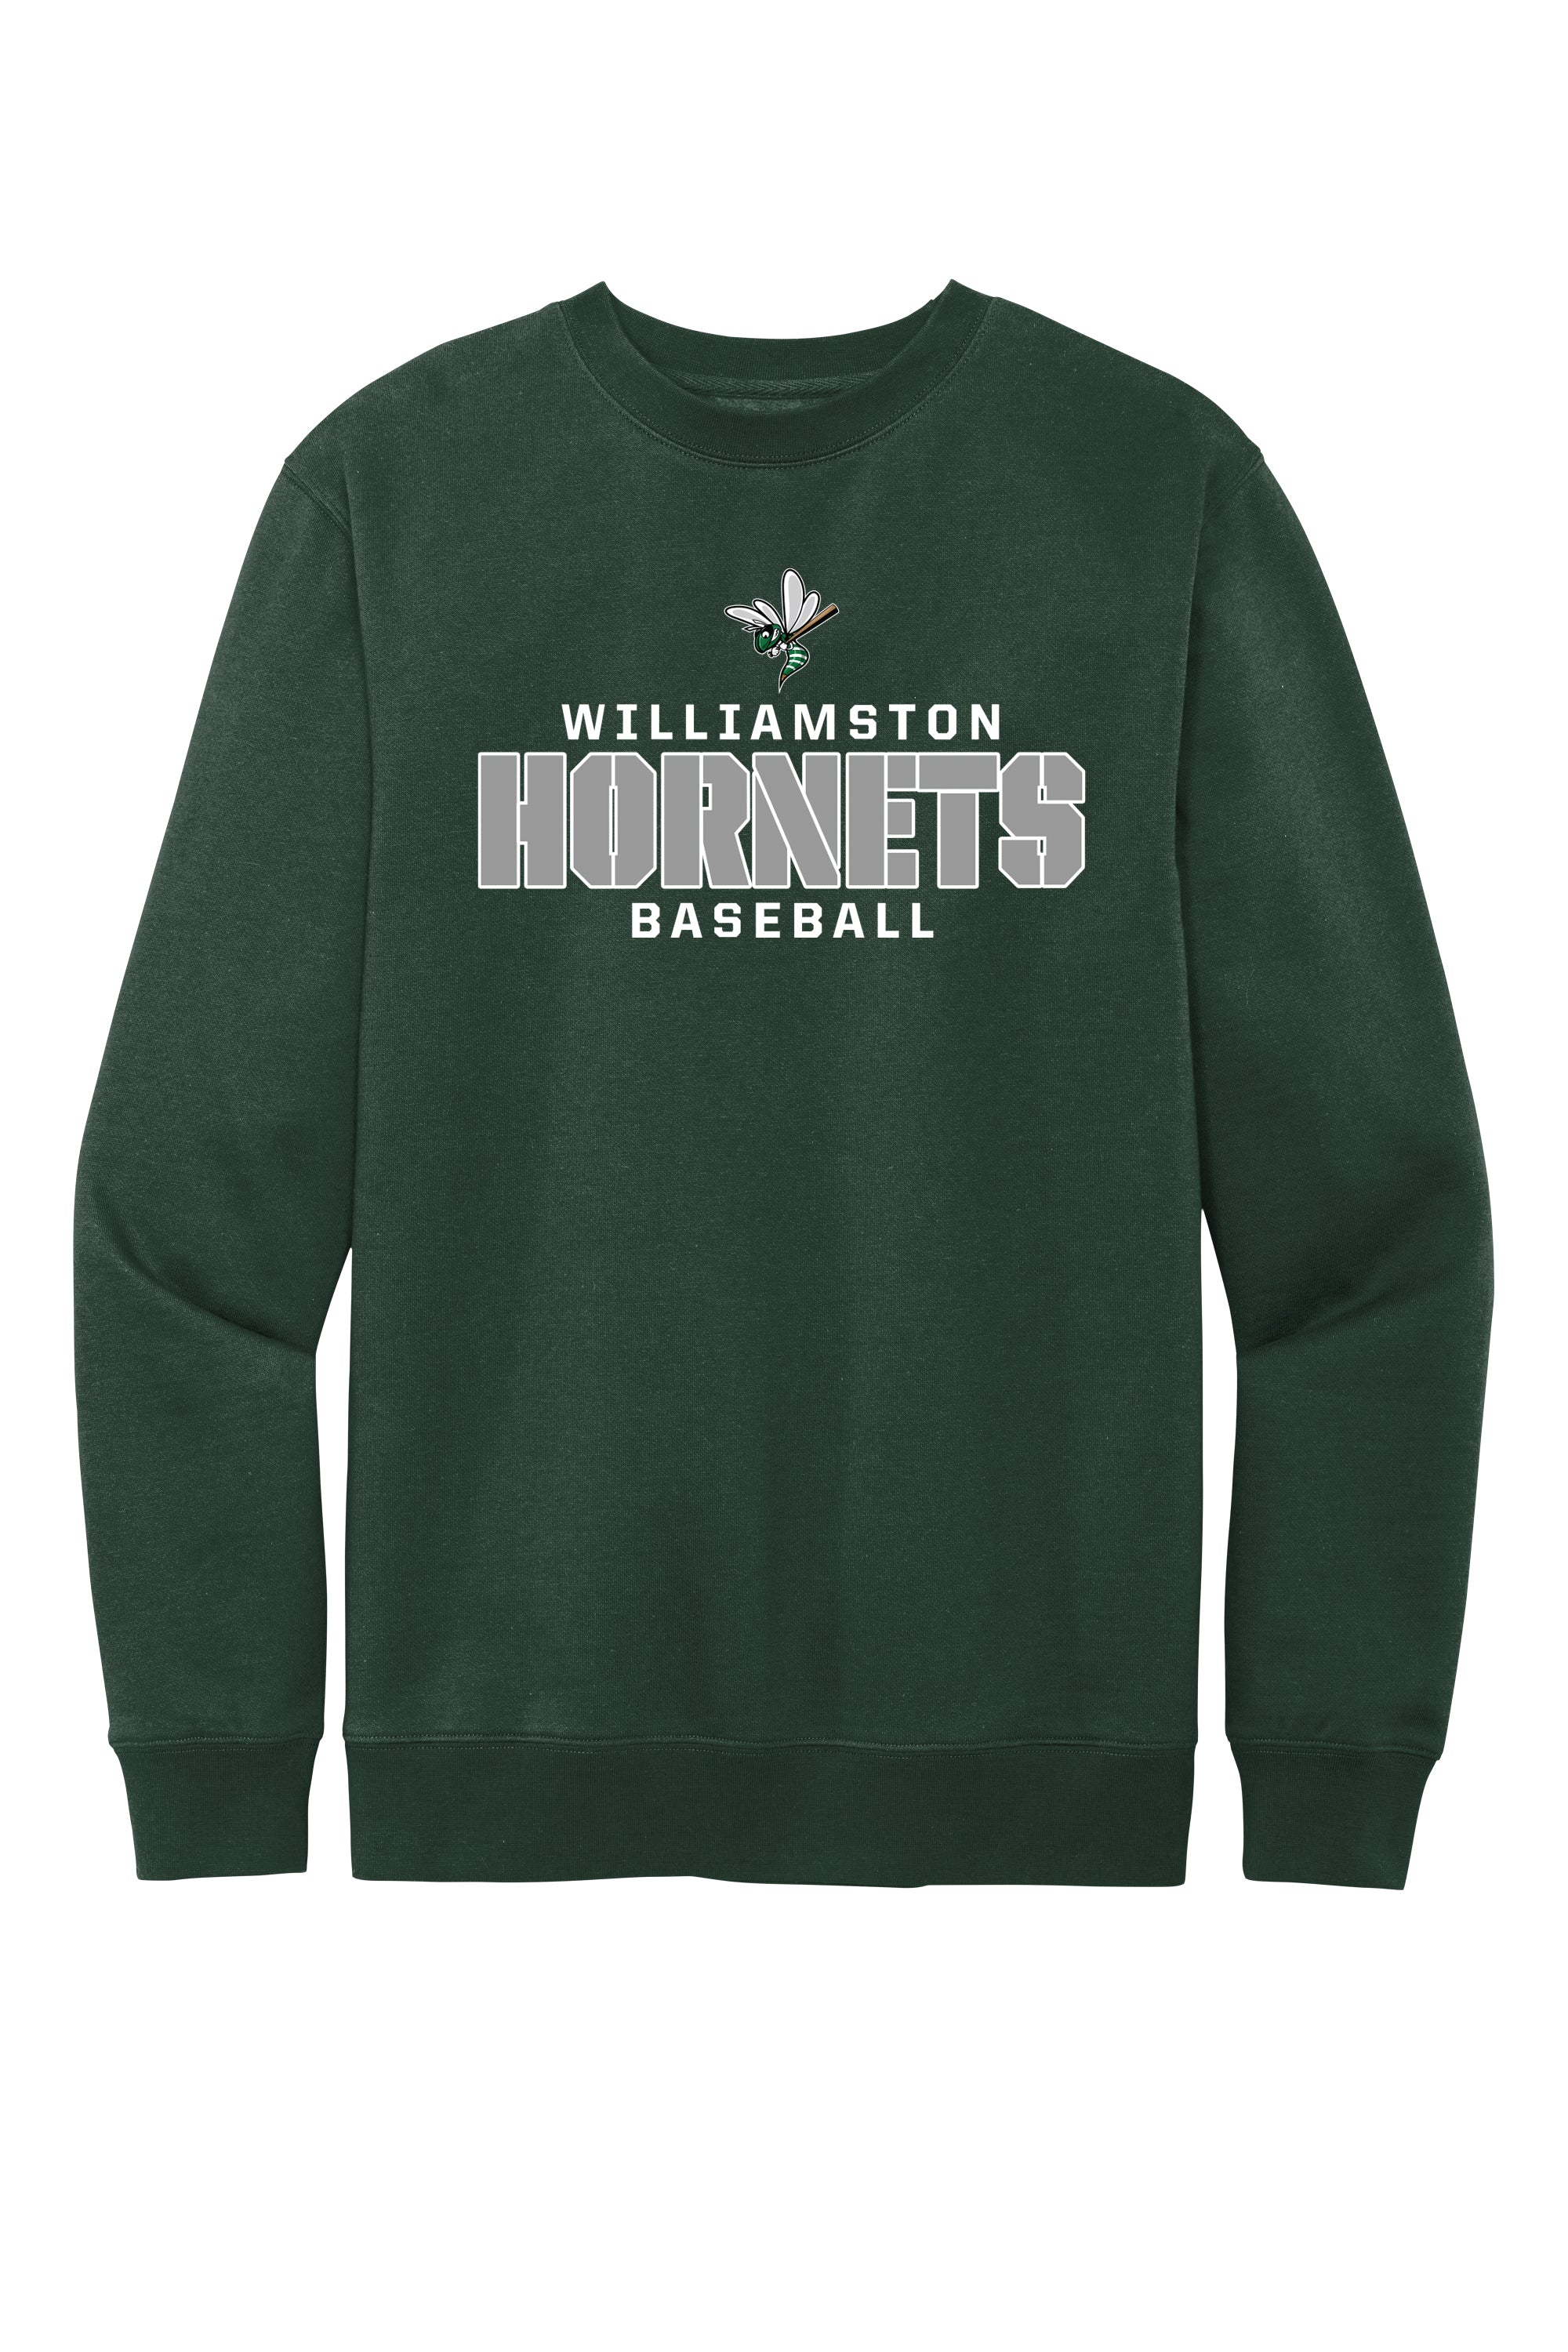 Williamston Baseball - Sweatshirt